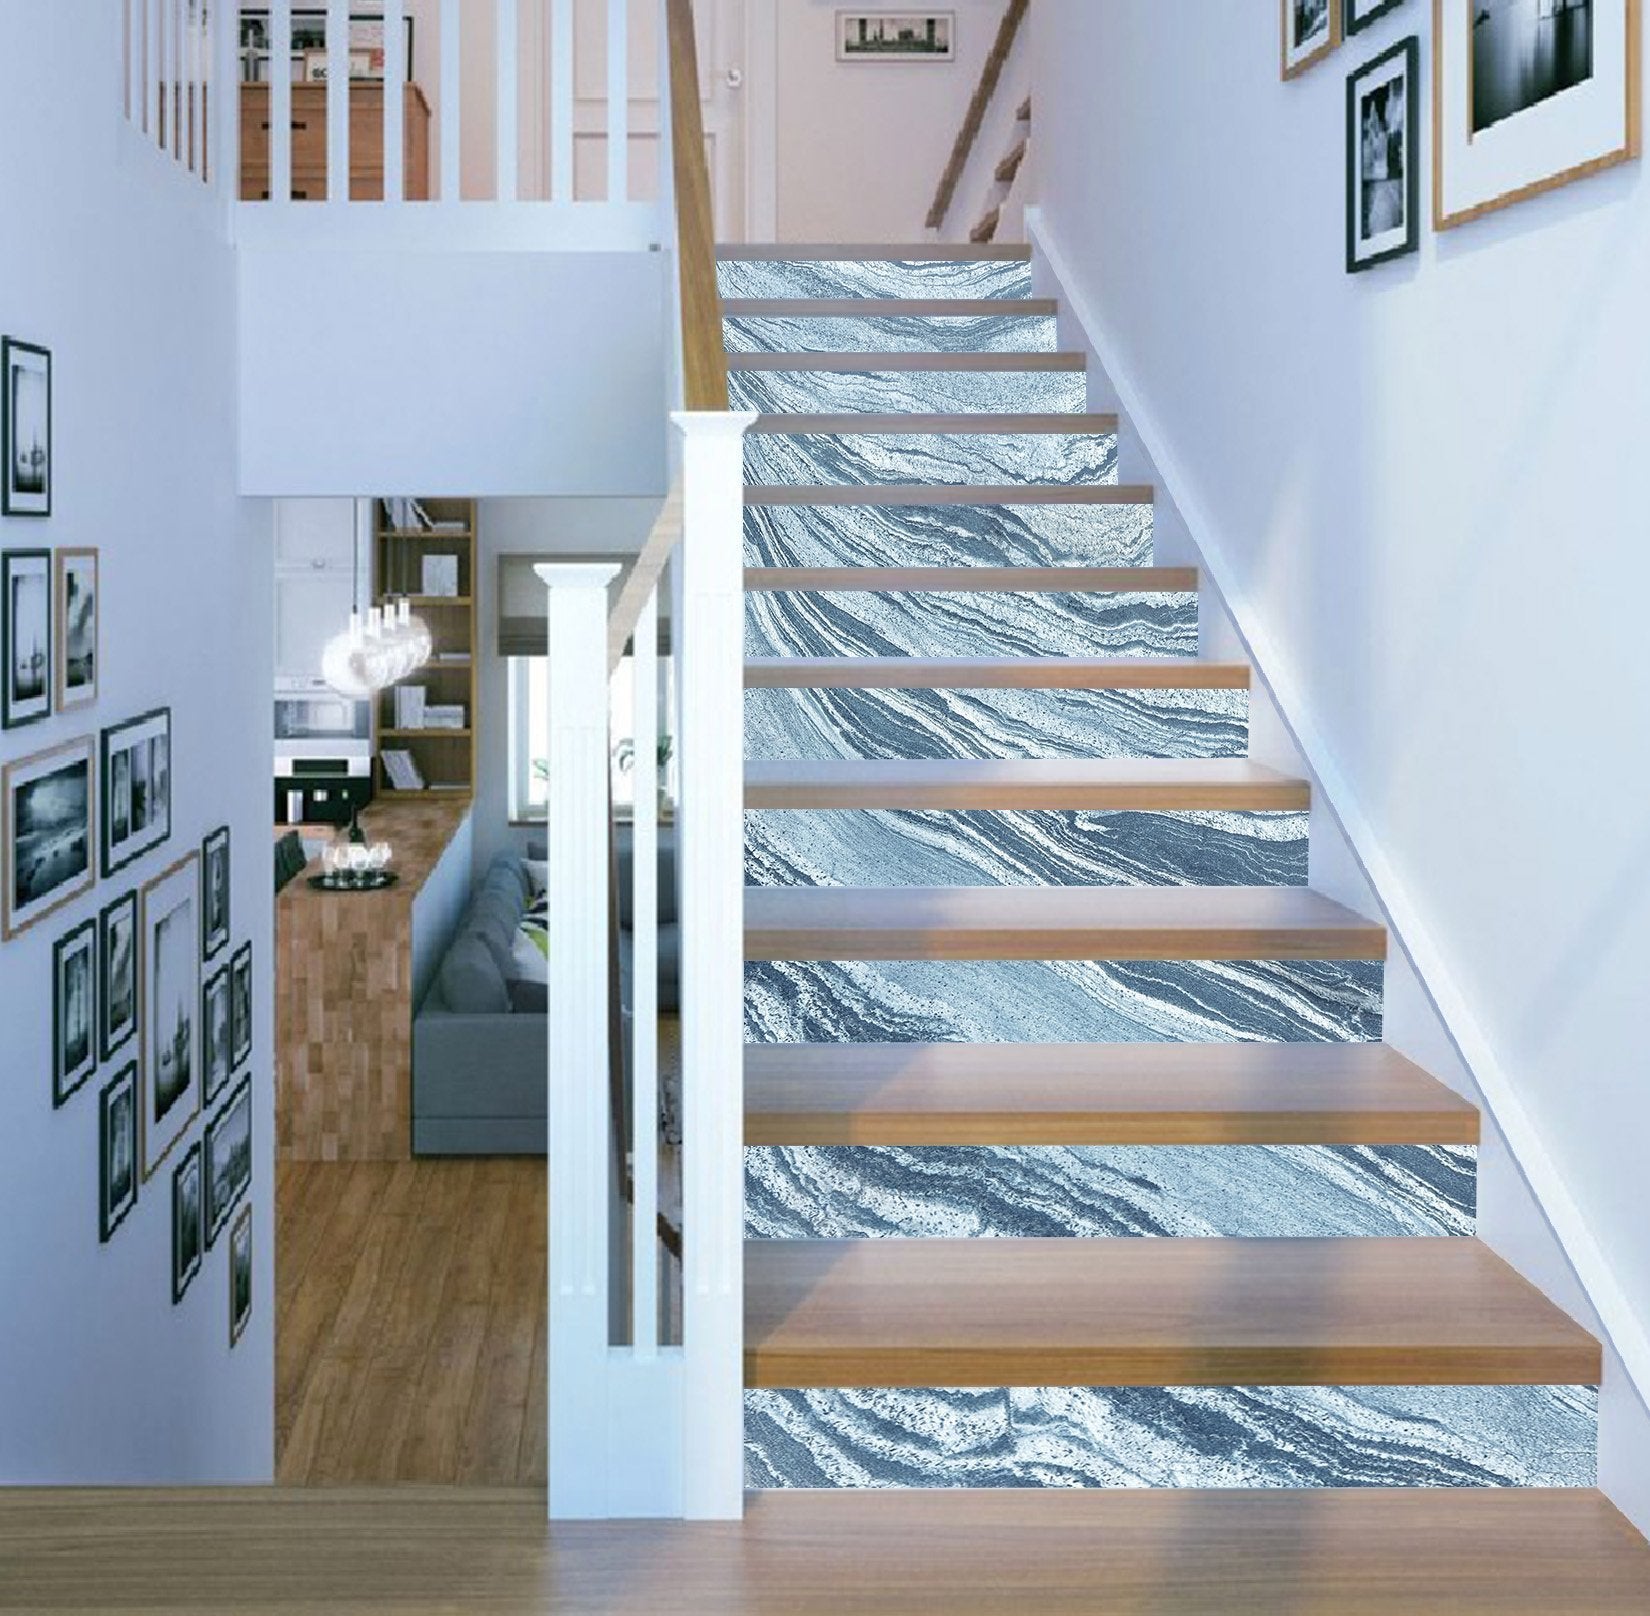 3D Sky Blue River 860 Marble Tile Texture Stair Risers Wallpaper AJ Wallpaper 